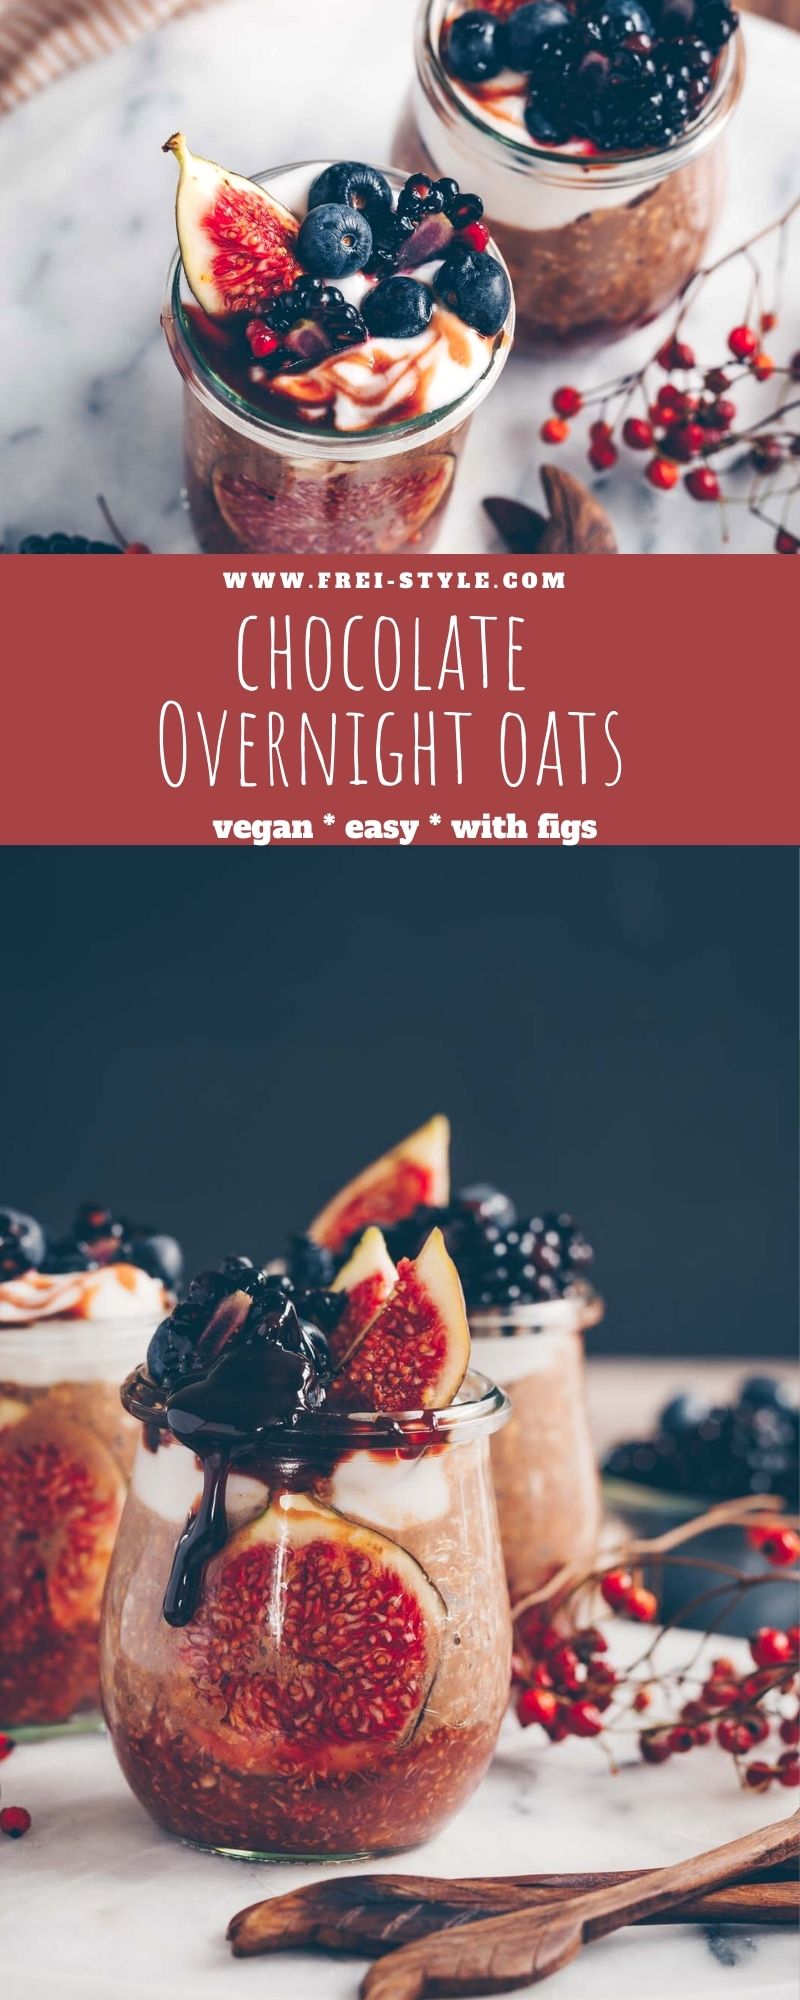 Chocolate overnight oats